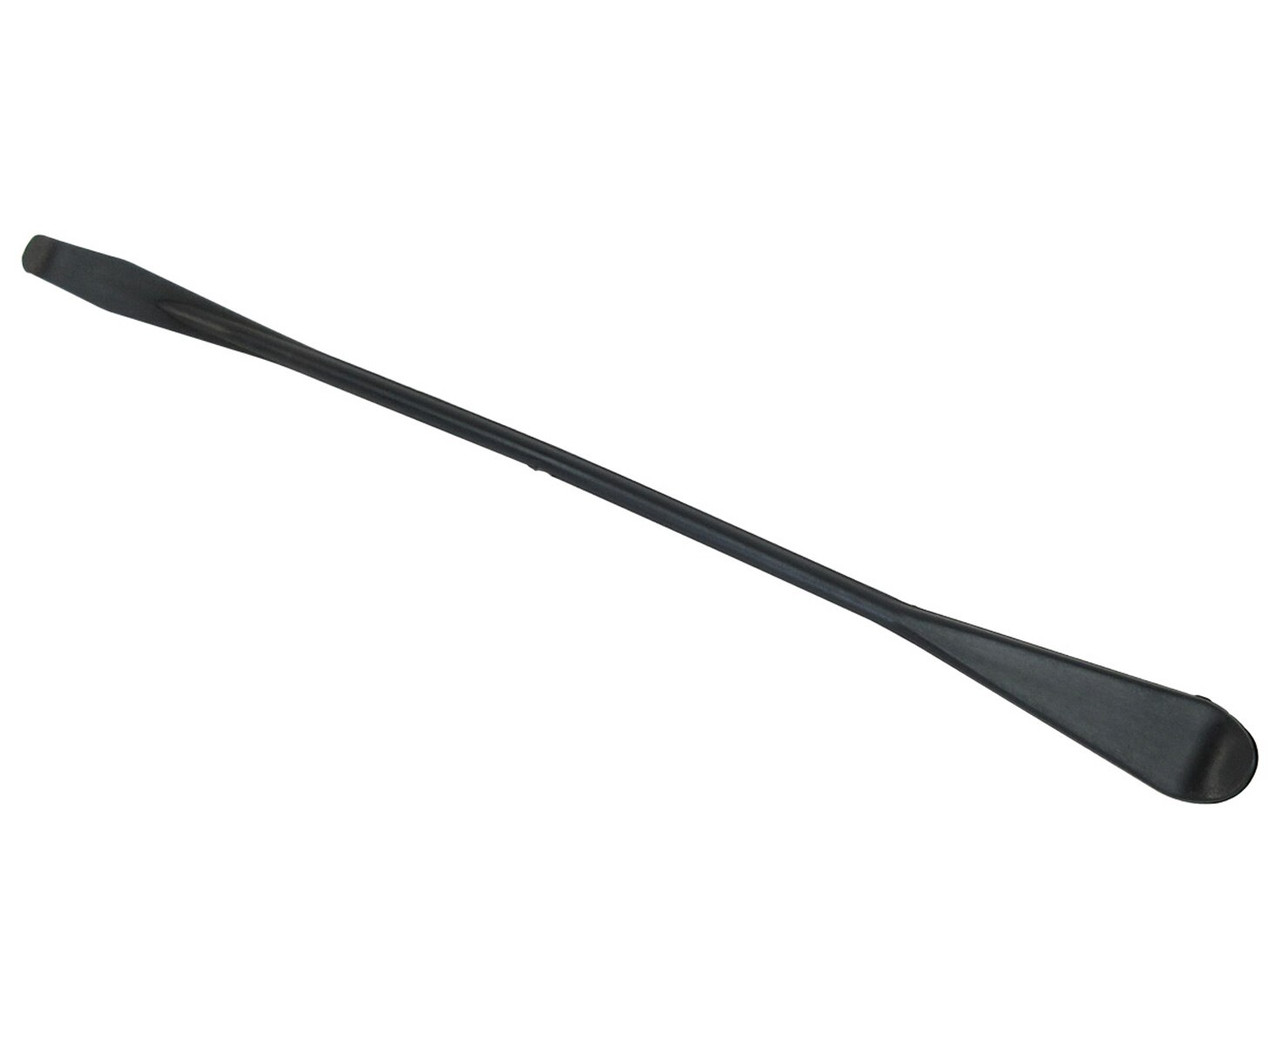 Double spatula 185mm,narrow, stiff, width 9mm - Laboratory equipment